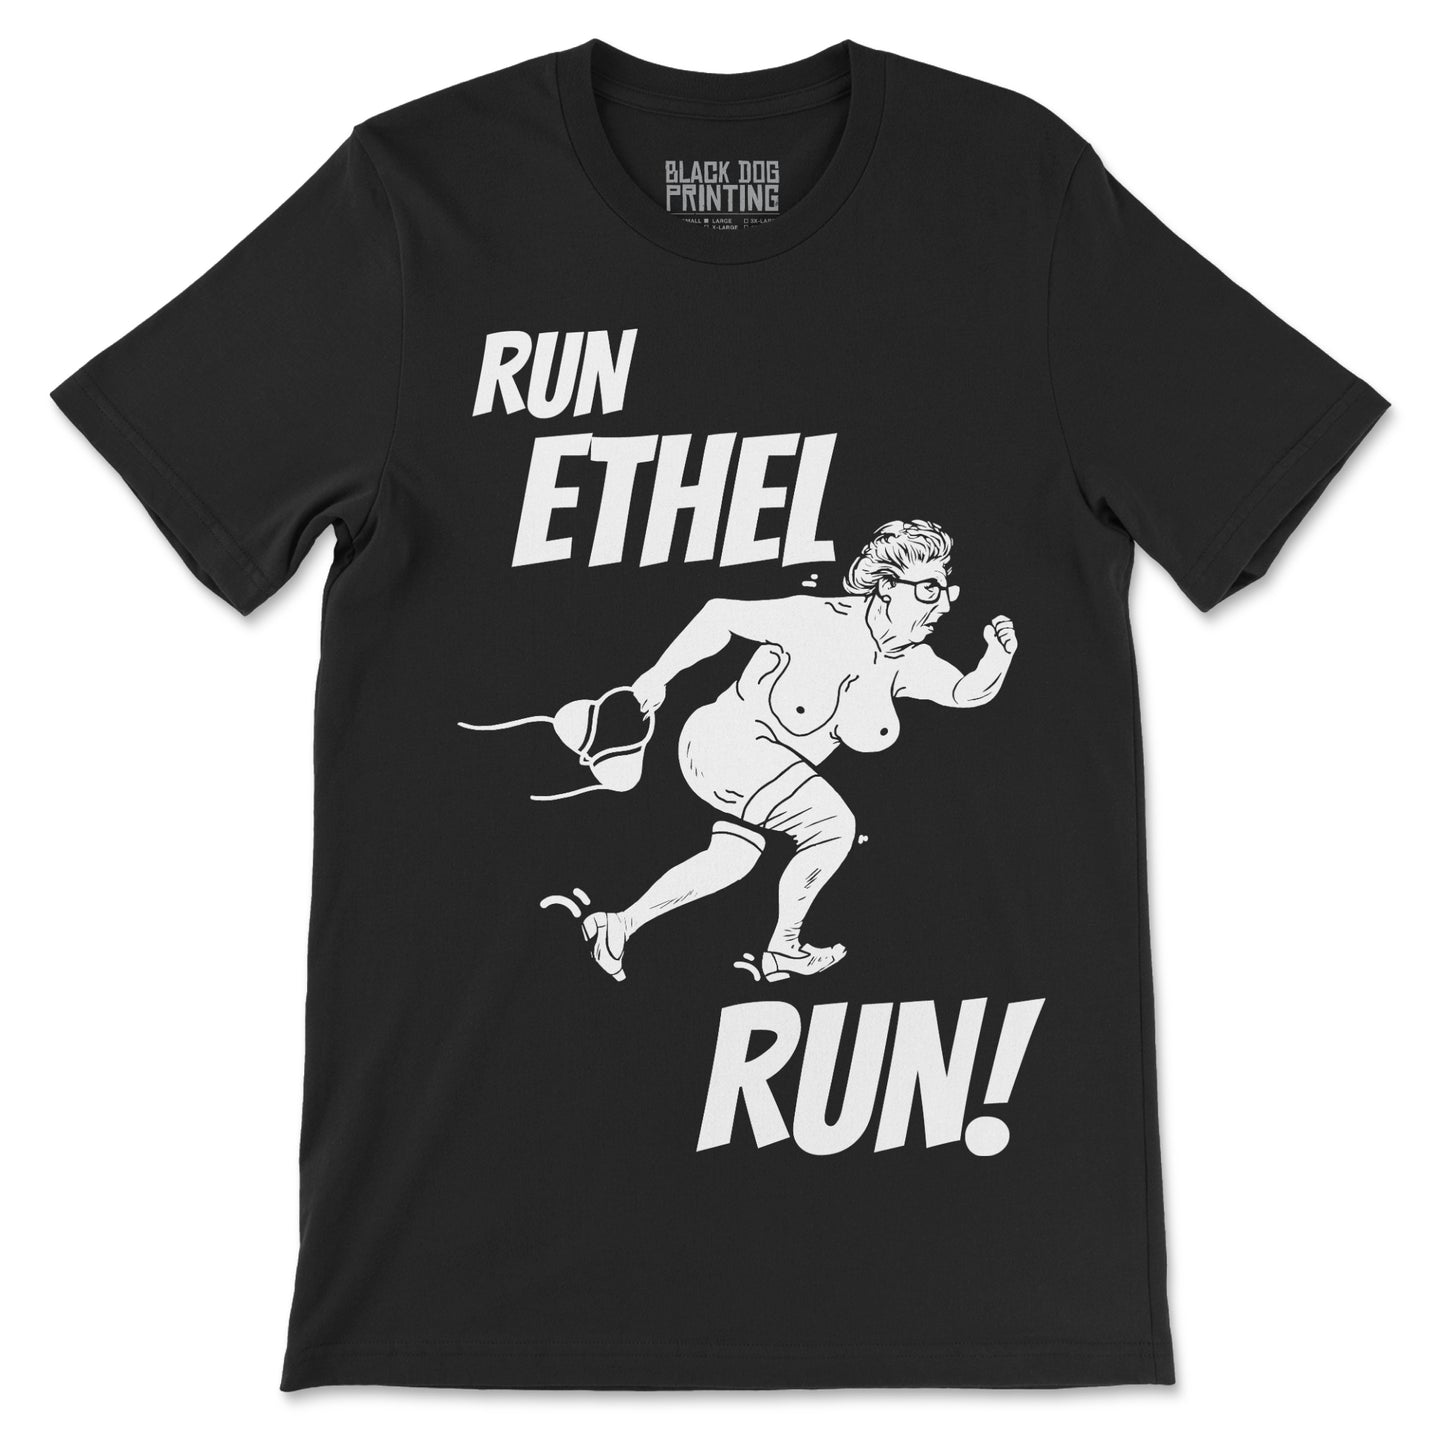 Run Ethel Run! Tee